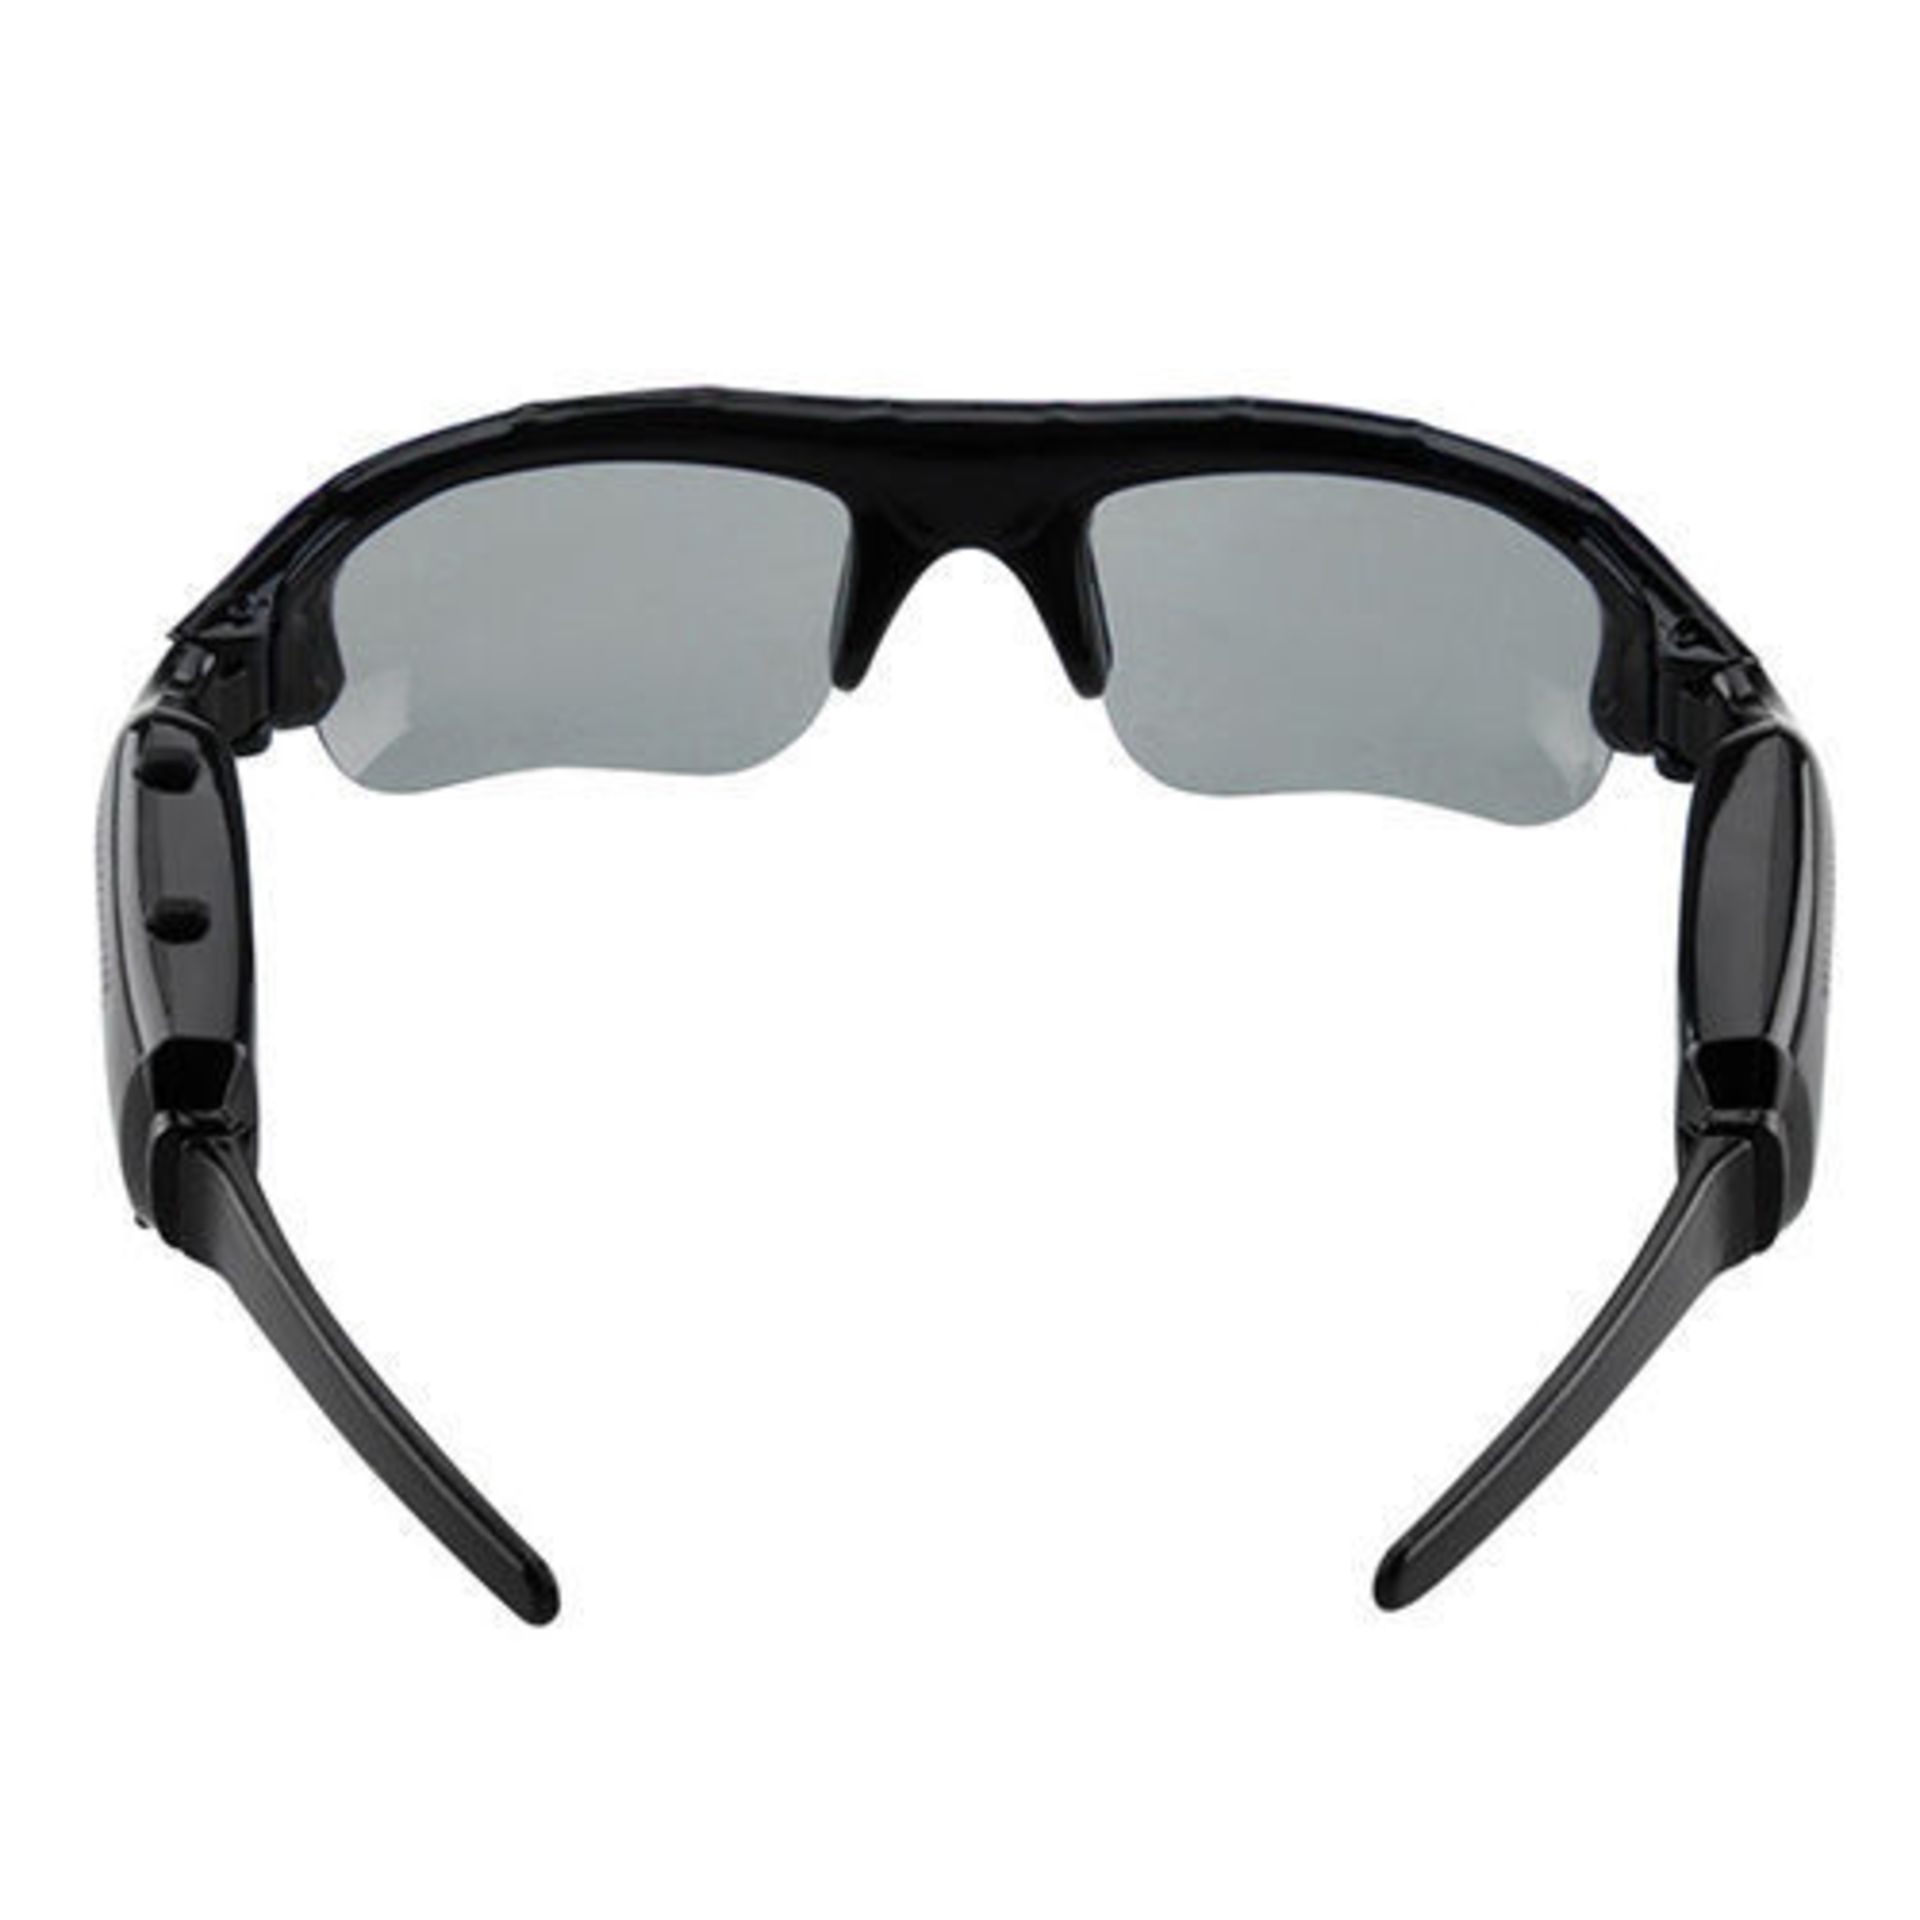 V Brand New Adventure Pro HD Video & Sound Recording Sunglasses Action Cam ISP £29.99 (Ebay) X 2 - Image 3 of 3